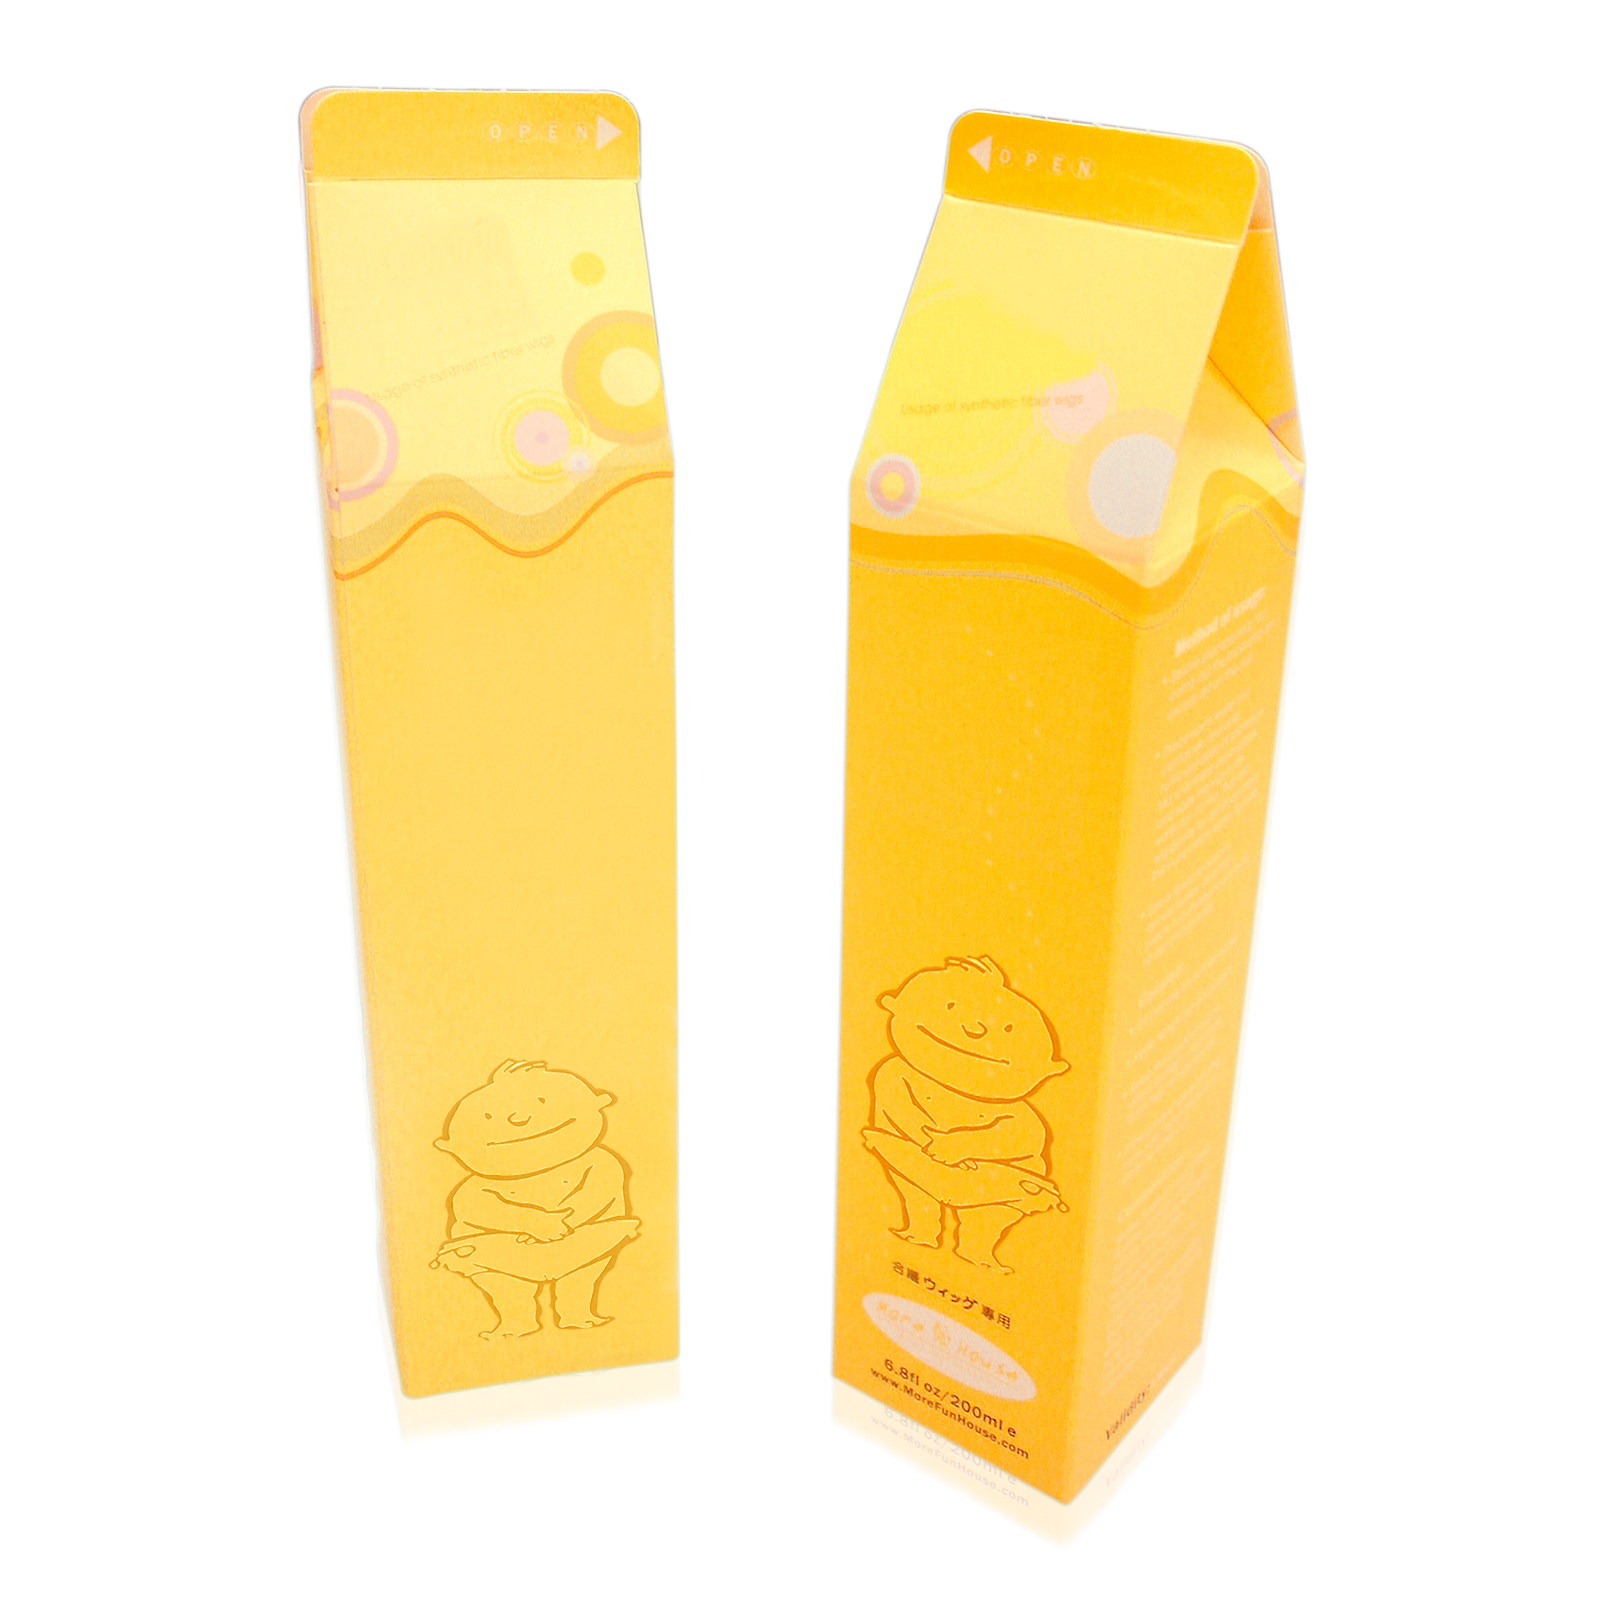 B-01 Milk shaped product box